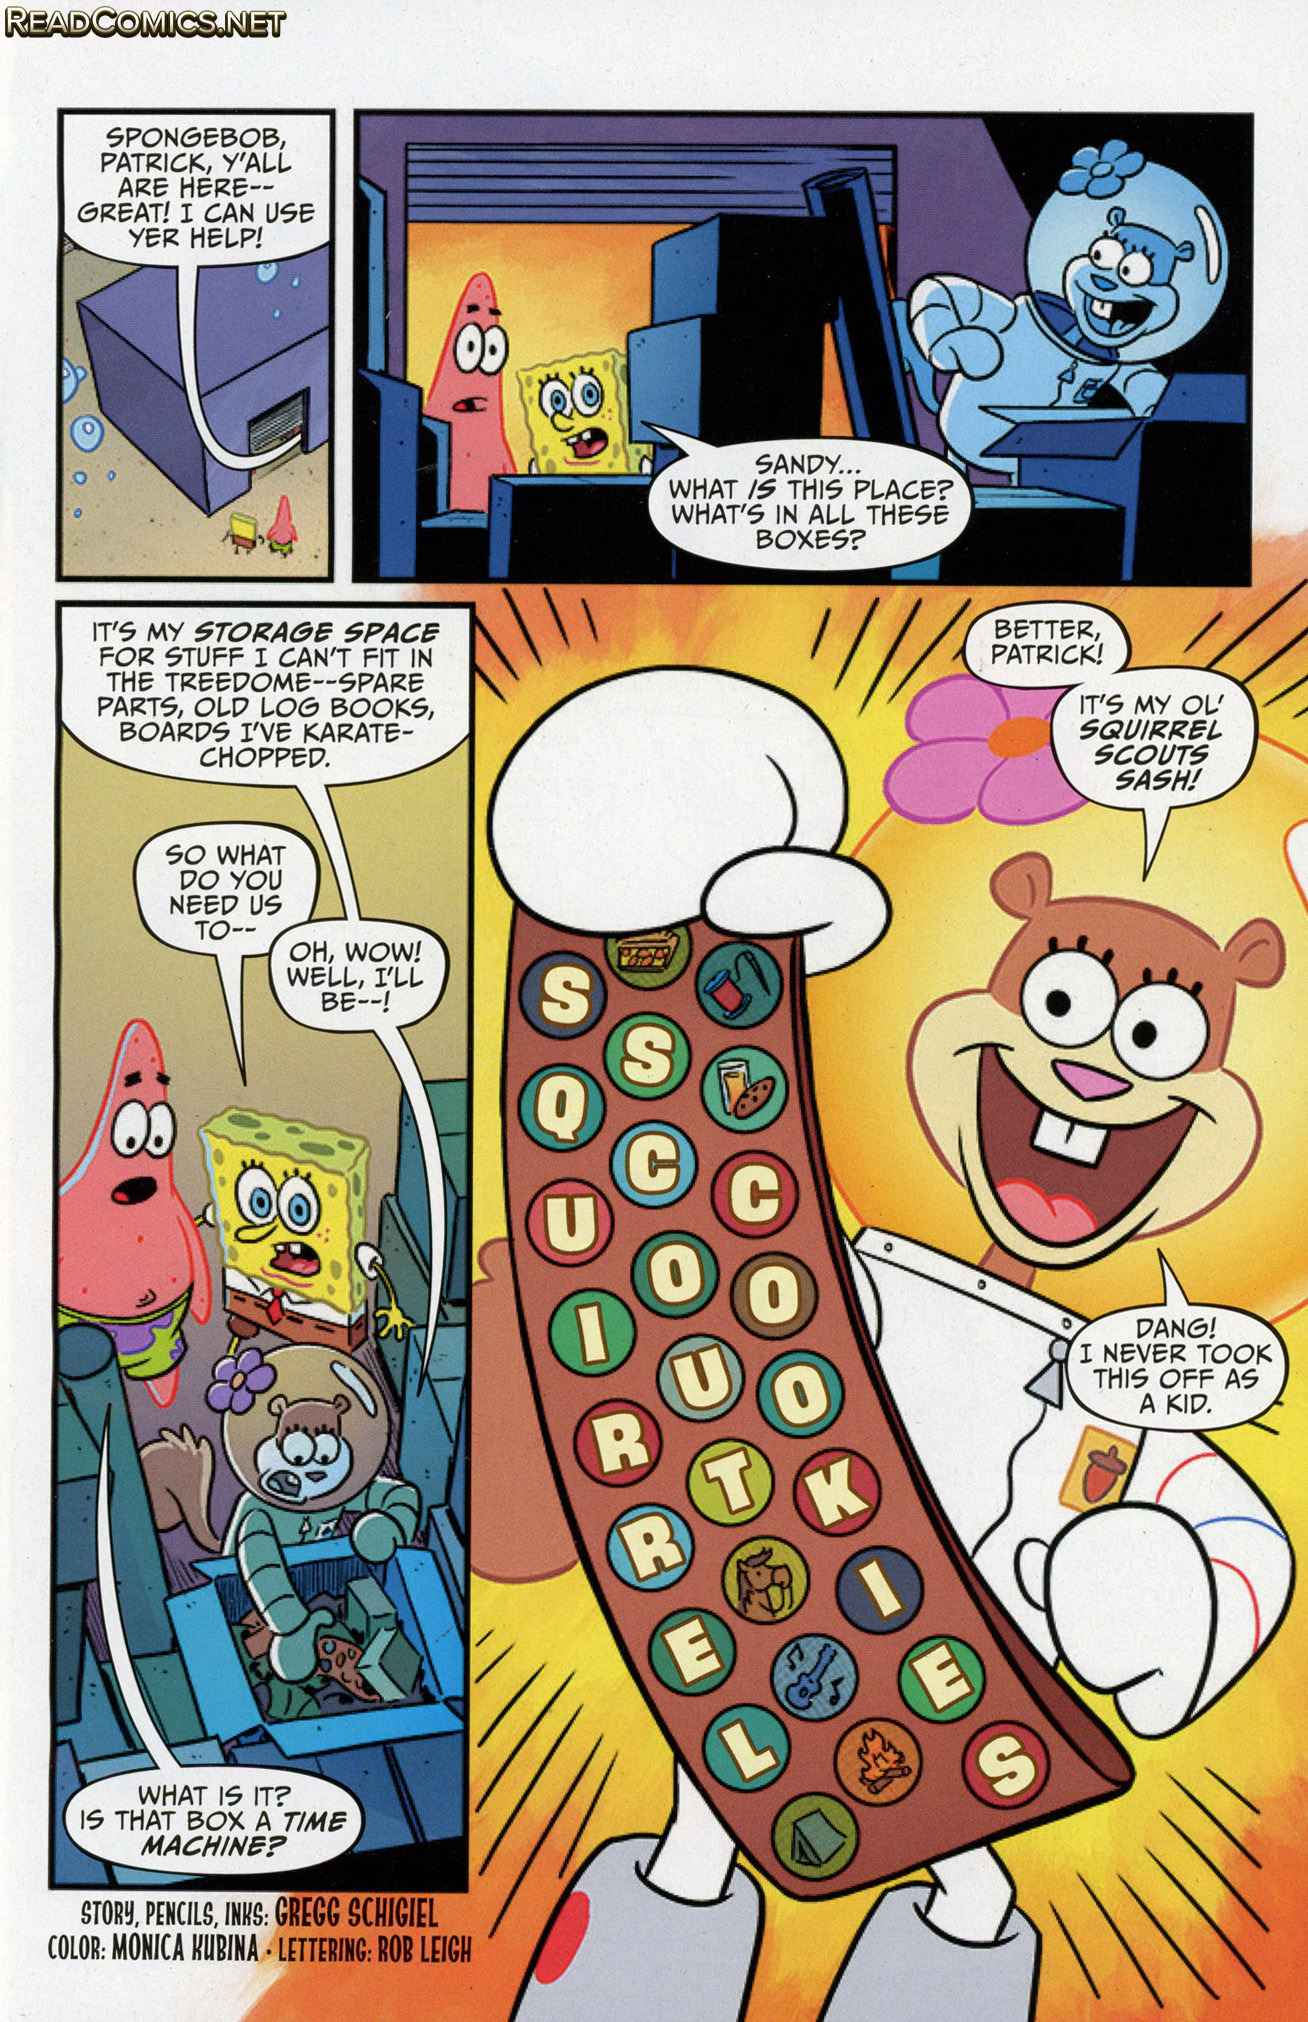 SpongeBob Comics (2011-): Chapter 54 - Page 3